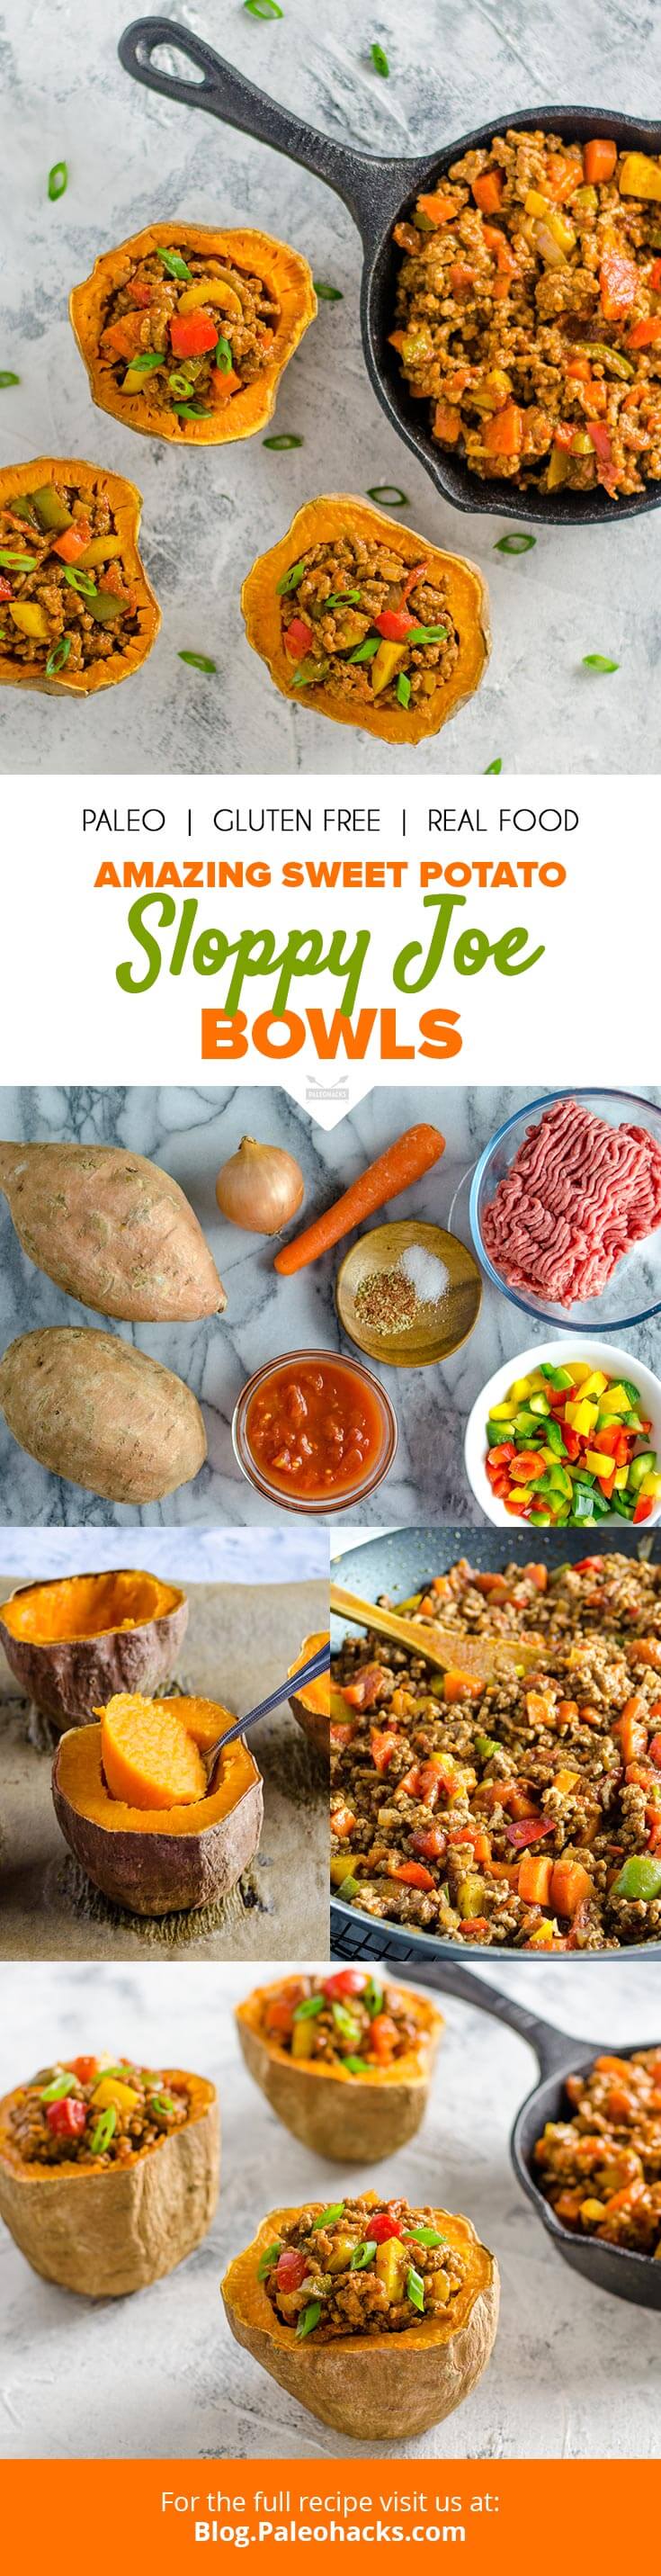 sweet potato sloppy joe bowls